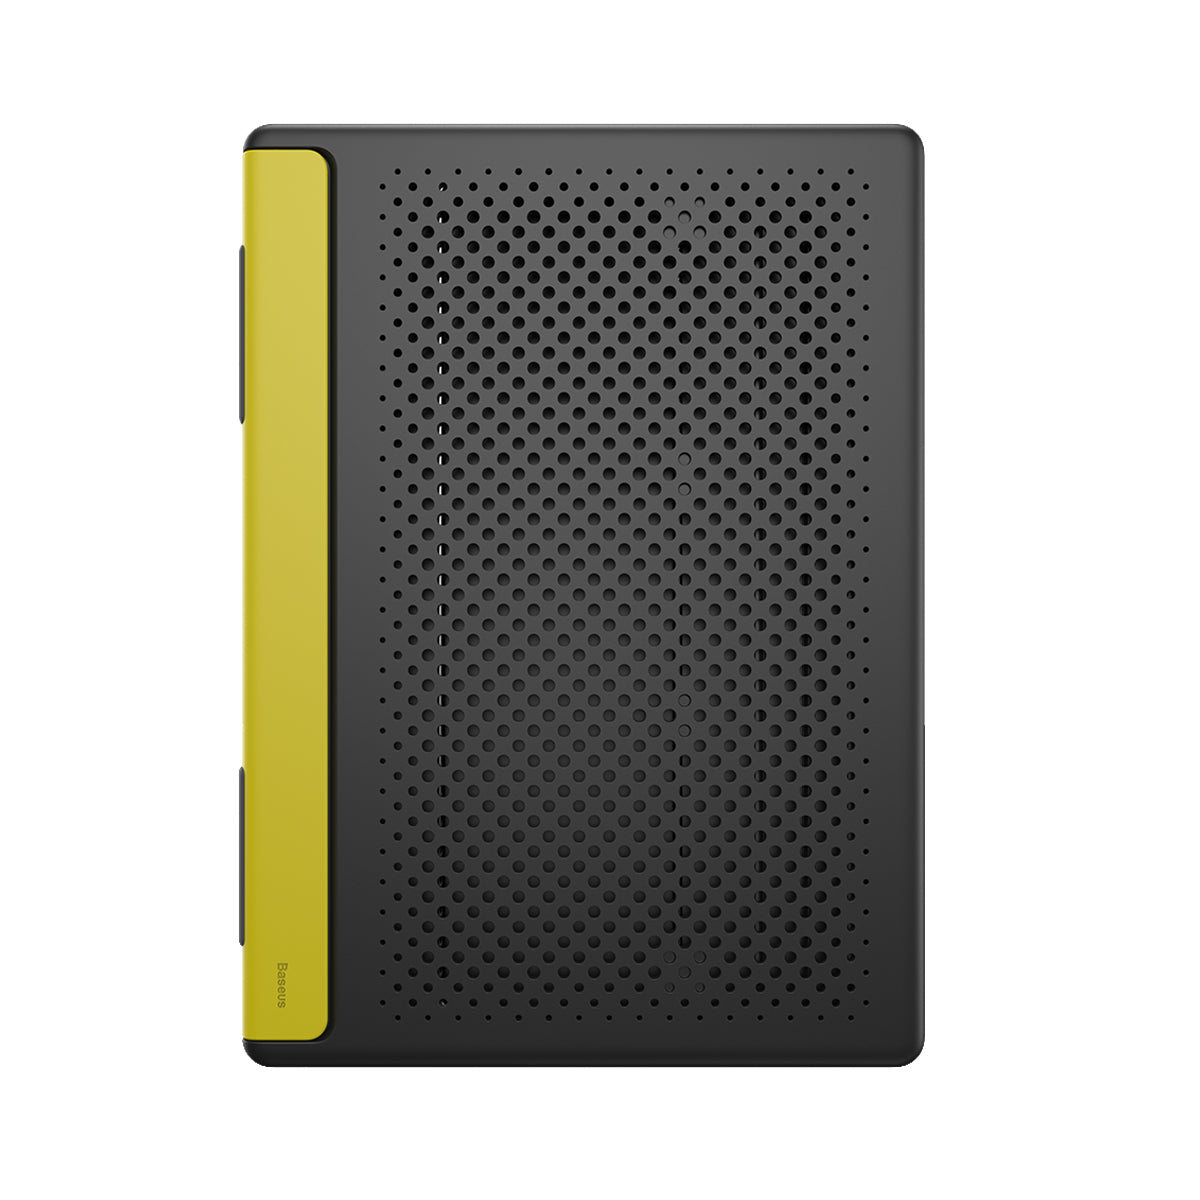 Baseus Foldable Laptop Stand Grey (SUDD-GY)